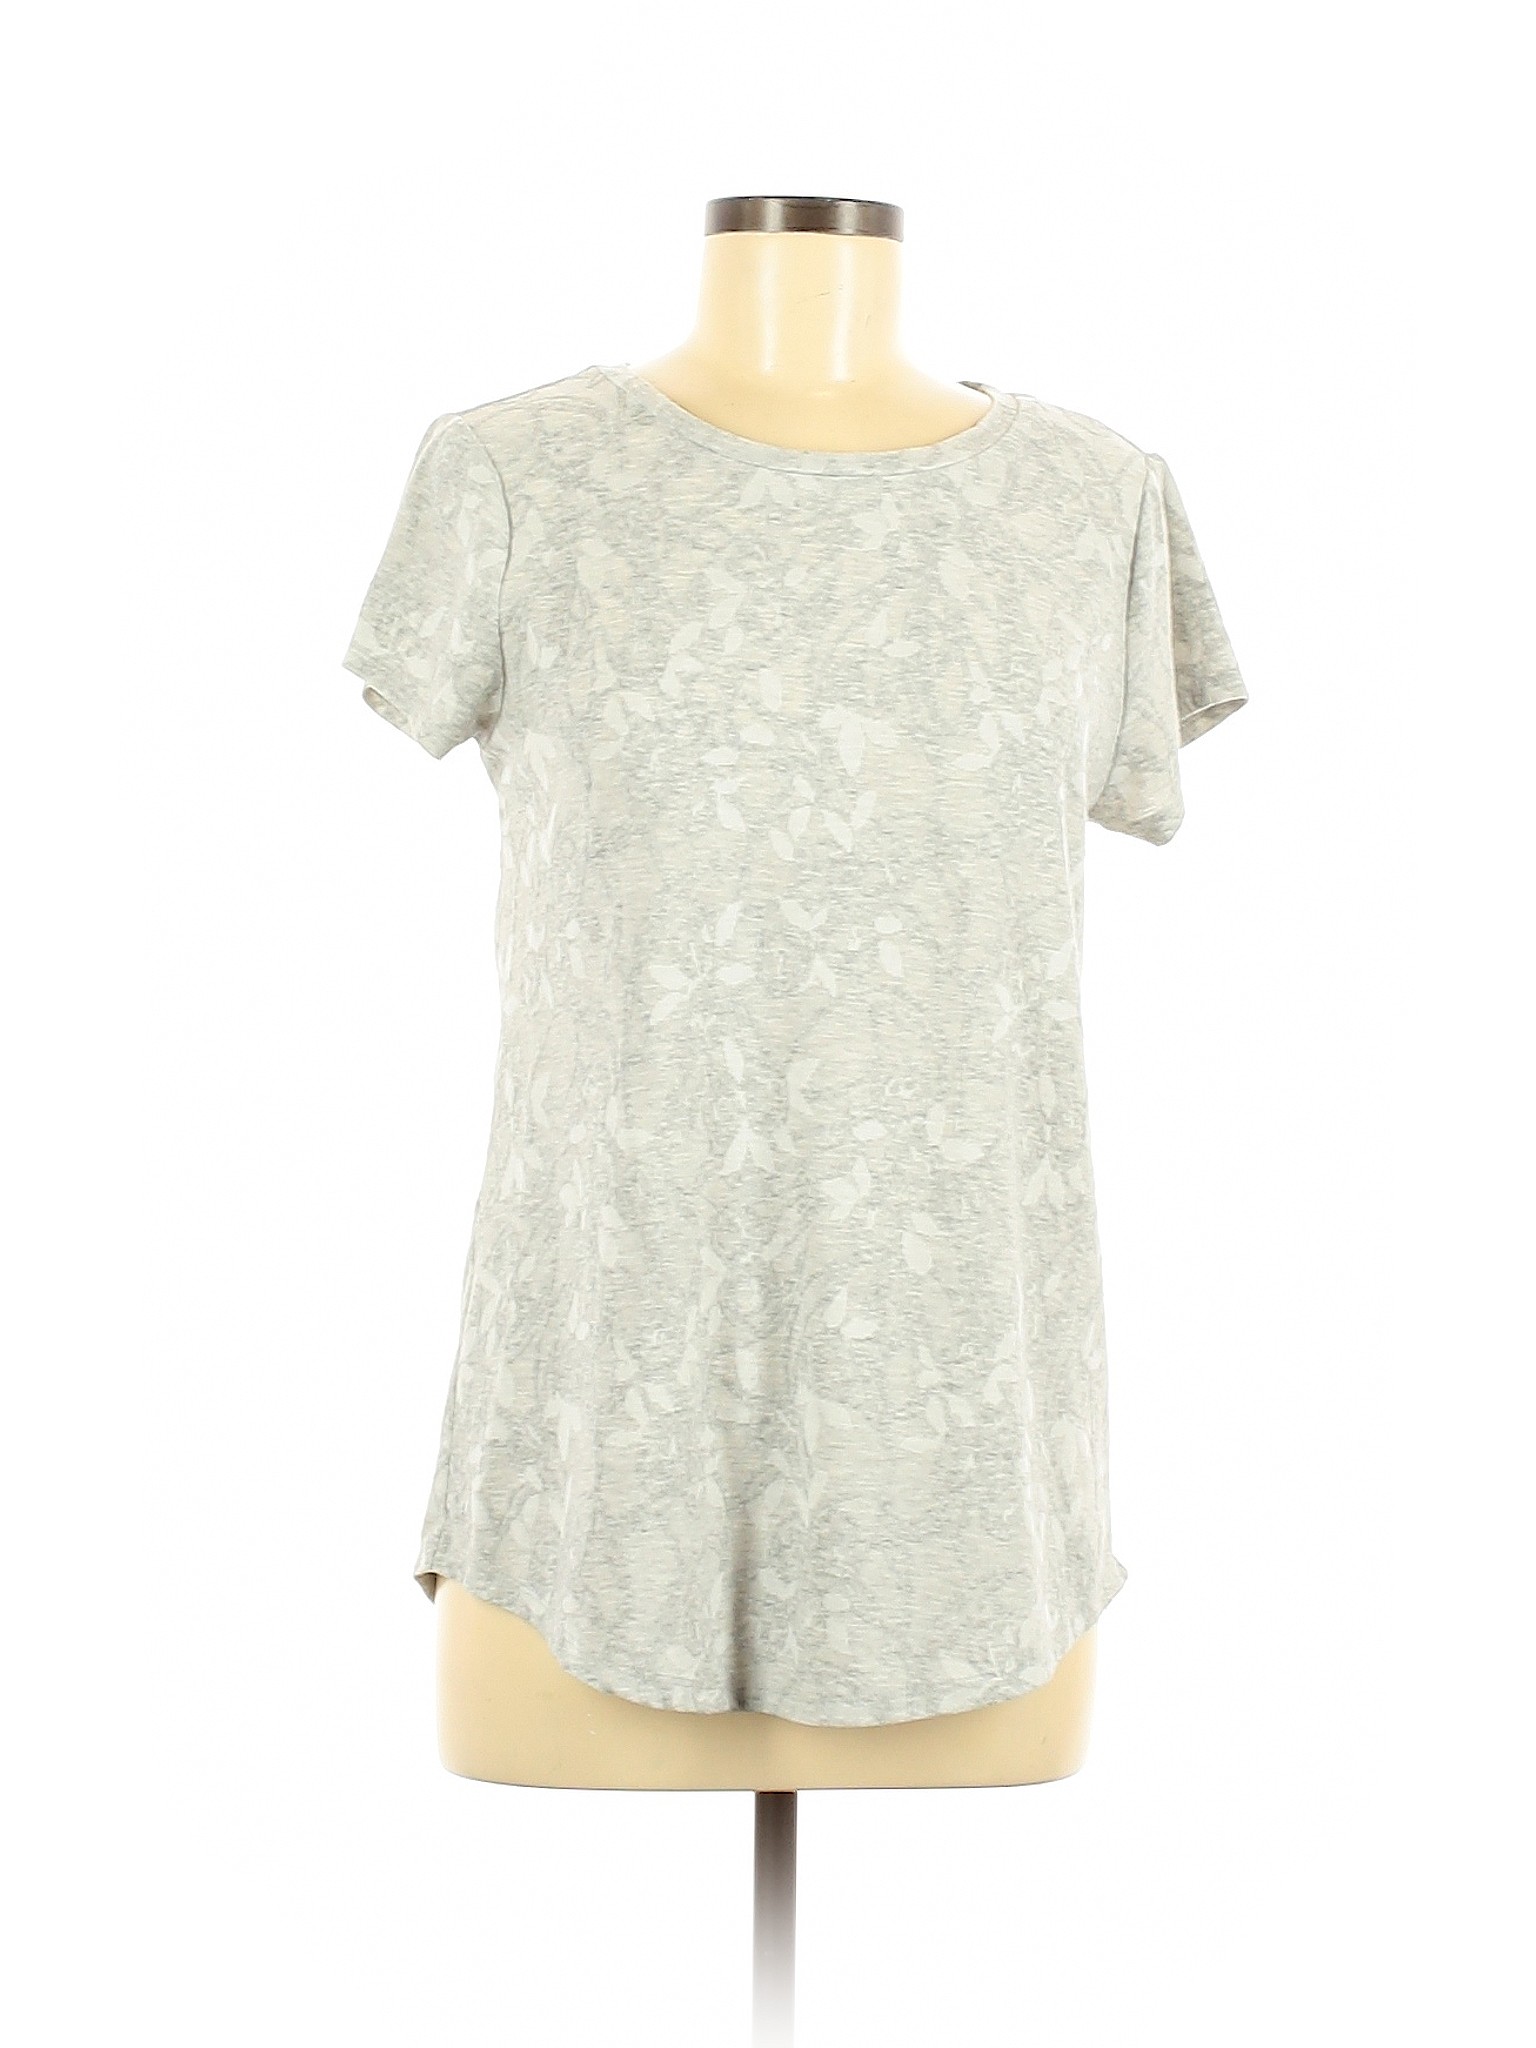 Simply Vera Vera Wang Women Gray Short Sleeve T-Shirt M | eBay